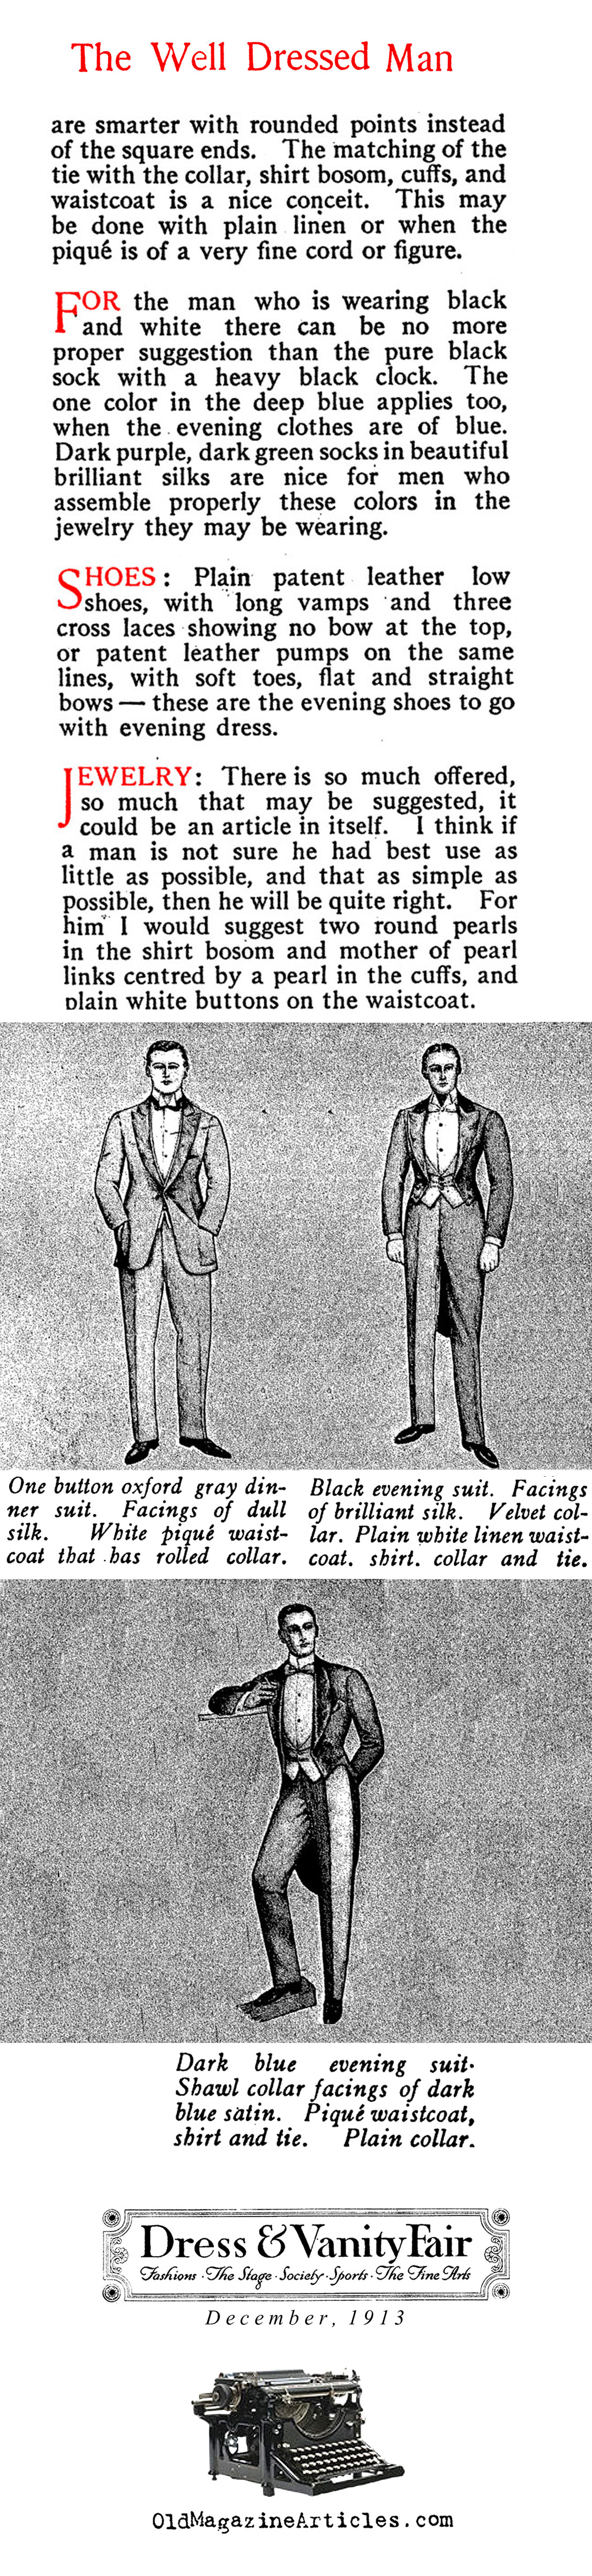 Sensible Rules for Men's Evening Clothes  (Vanity Fair Magazine, 1913)